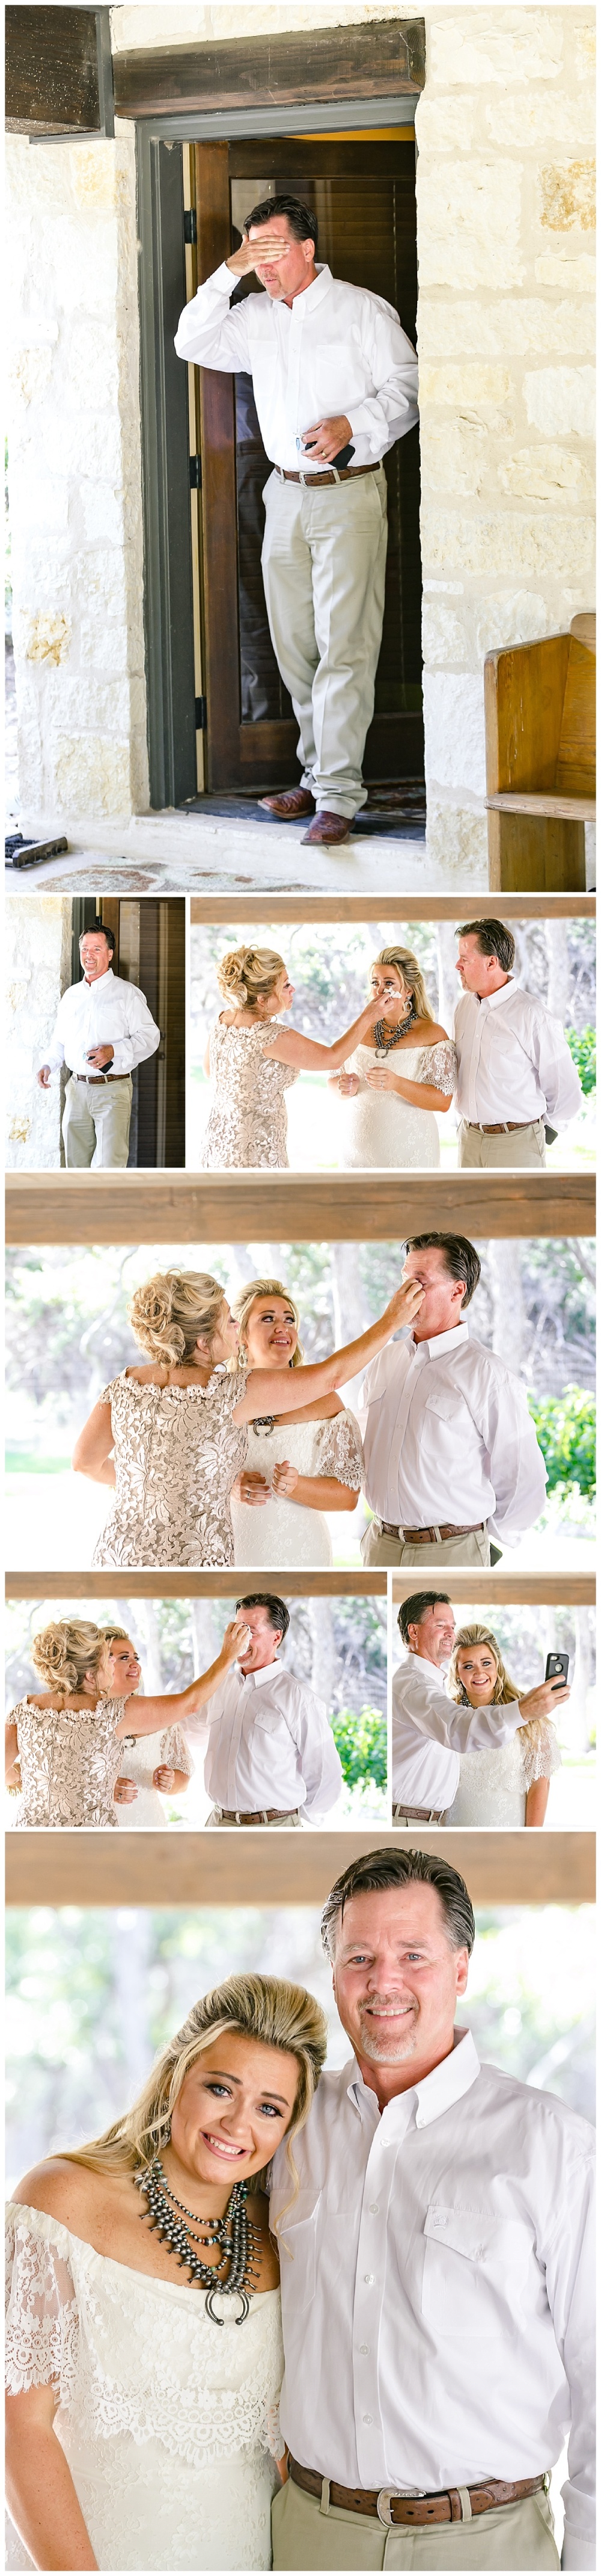 Texas-Wedding-Photographer-Braded-T-Ranch-Kendalia-Bride-Groom-Southwestern-Style-Carly-Barton-Photography-Vogt_0021.jpg